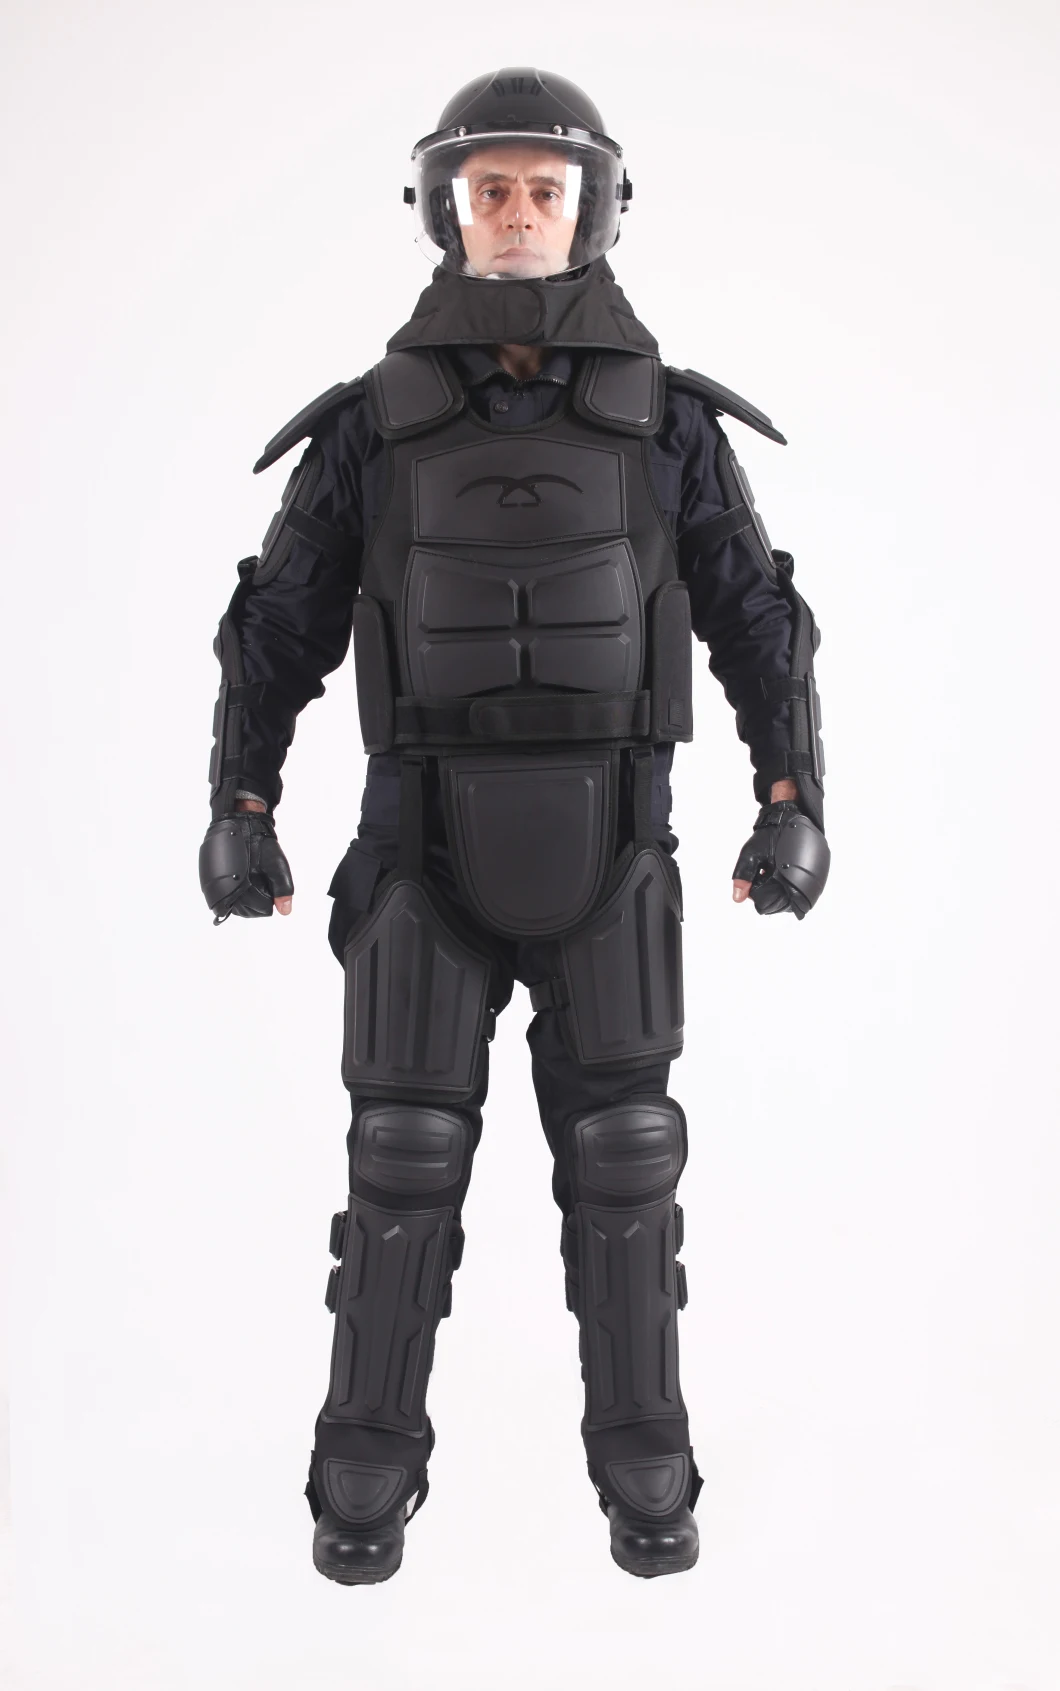 Stab Resistant Riot Gear Anti Riot Suit Police Uniform